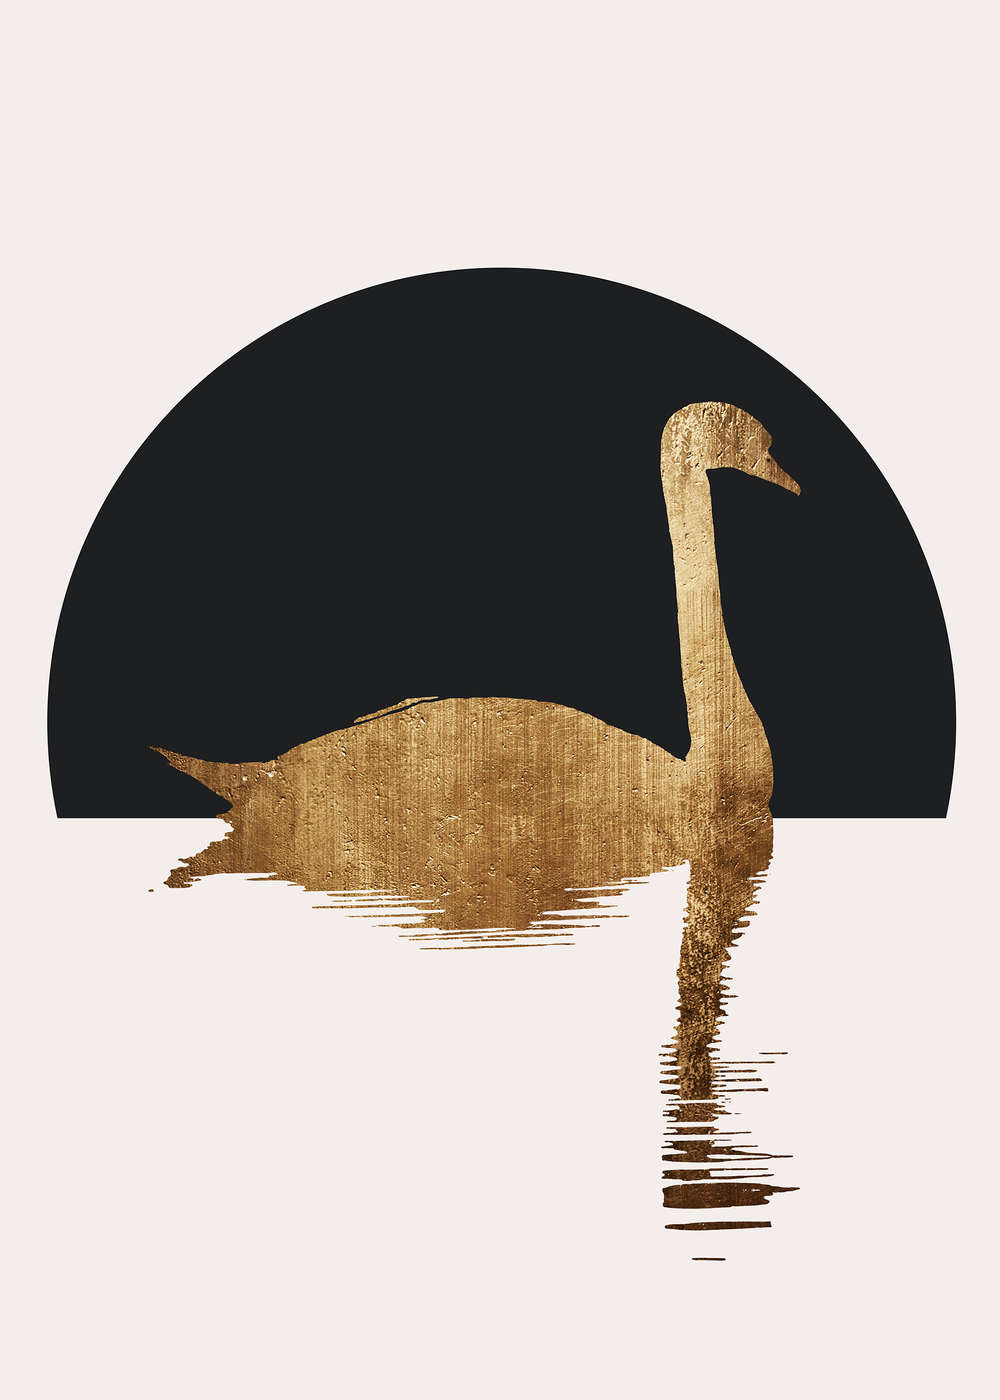             Swan mural with minimalist design
        